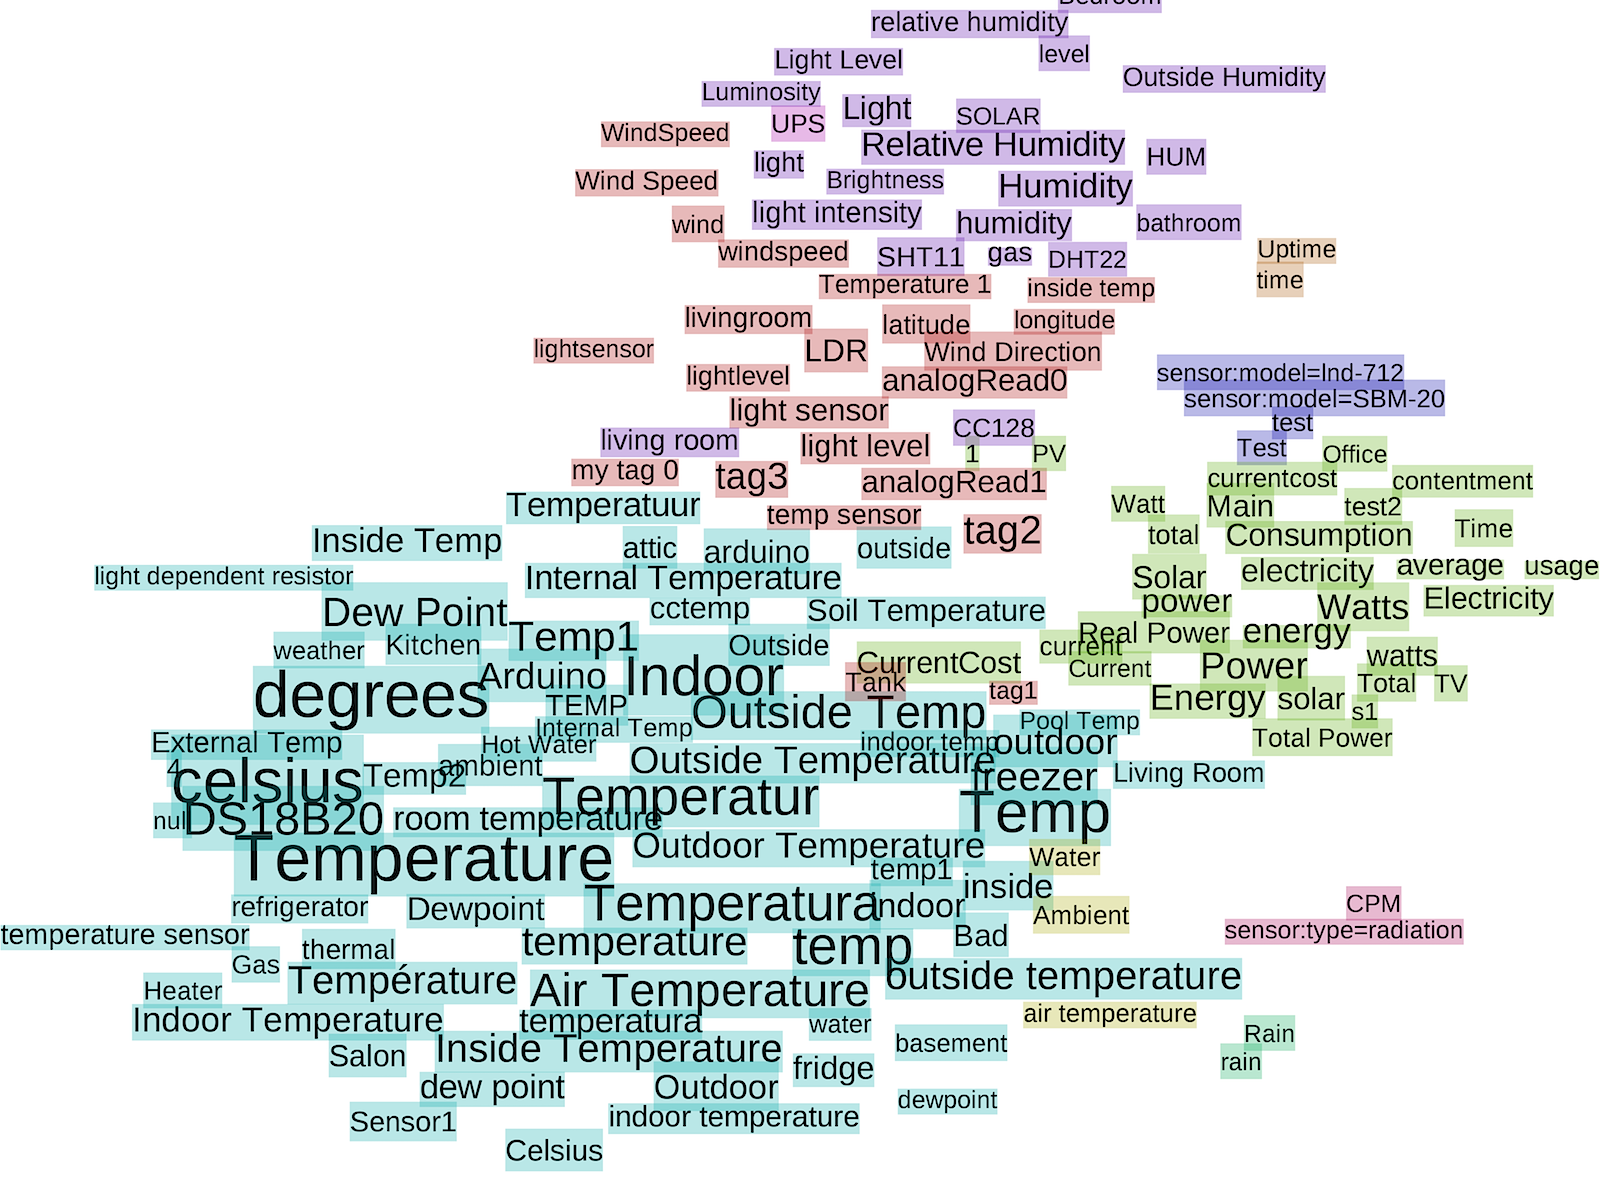 Term clusters in the Cosm sensor metadata